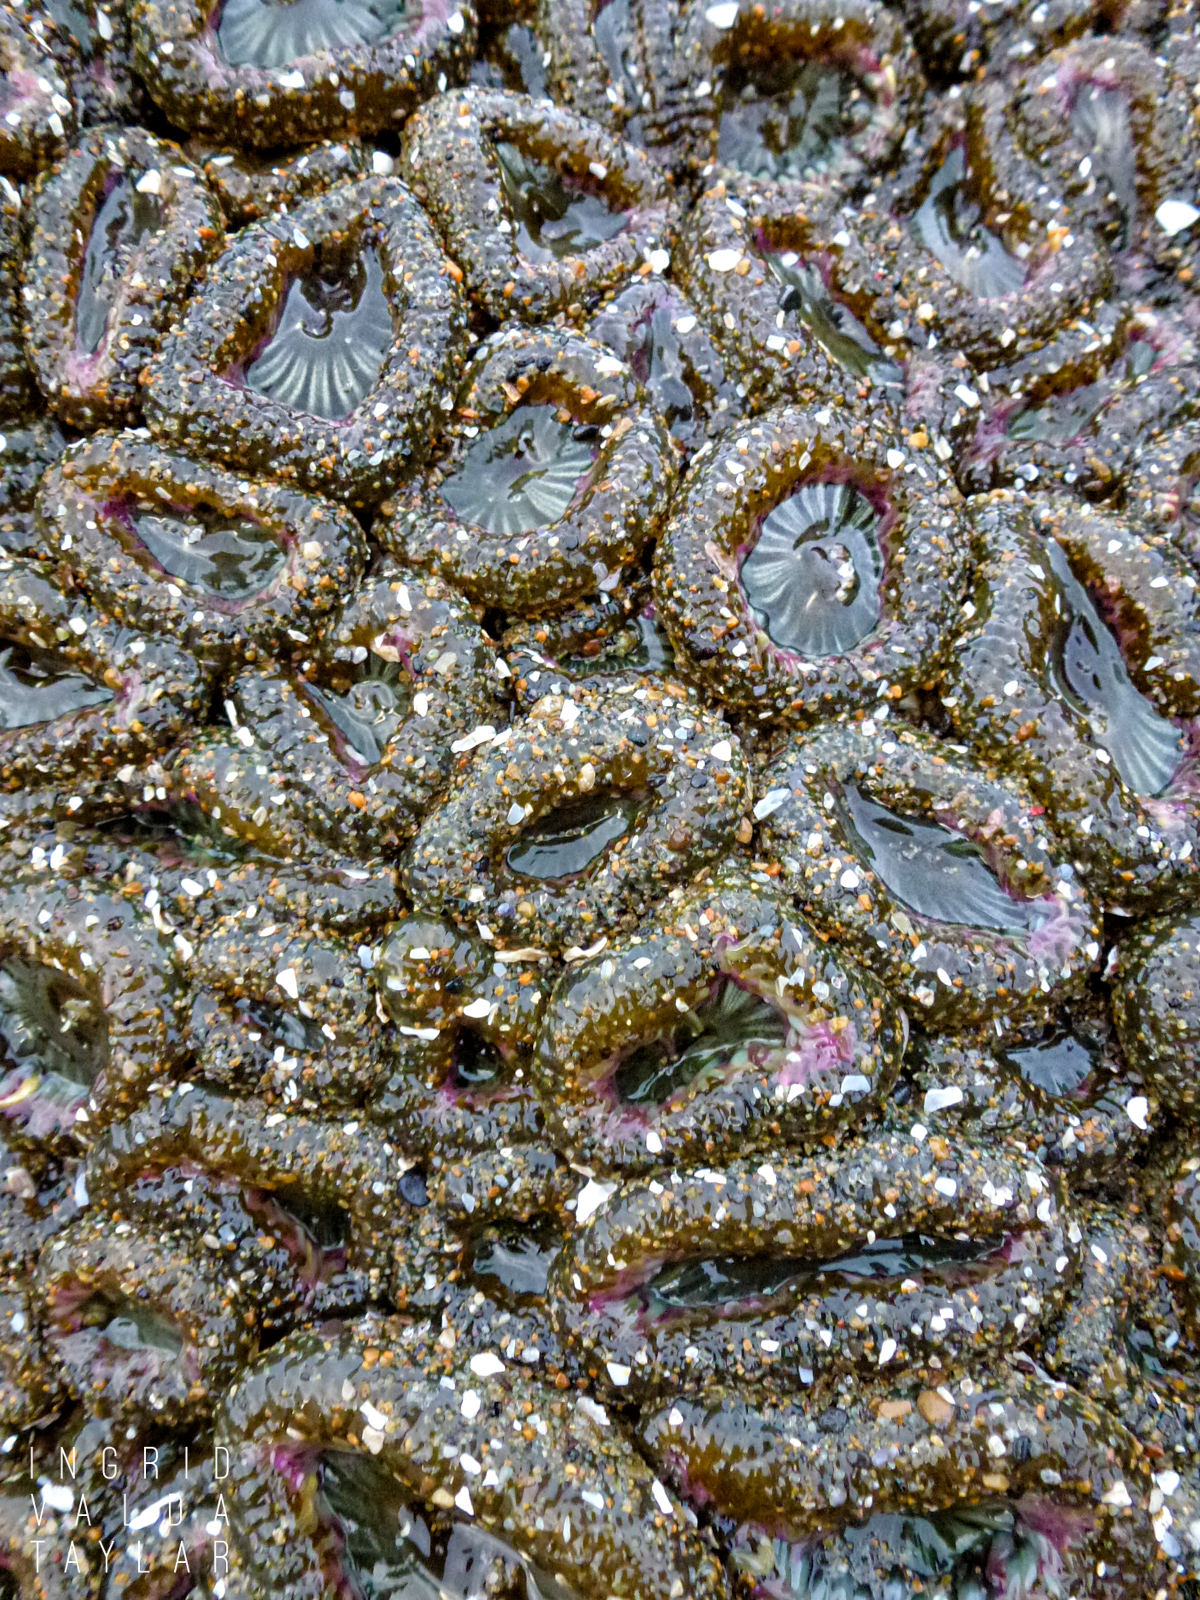 Aggregating Anemones on Oregon Coast